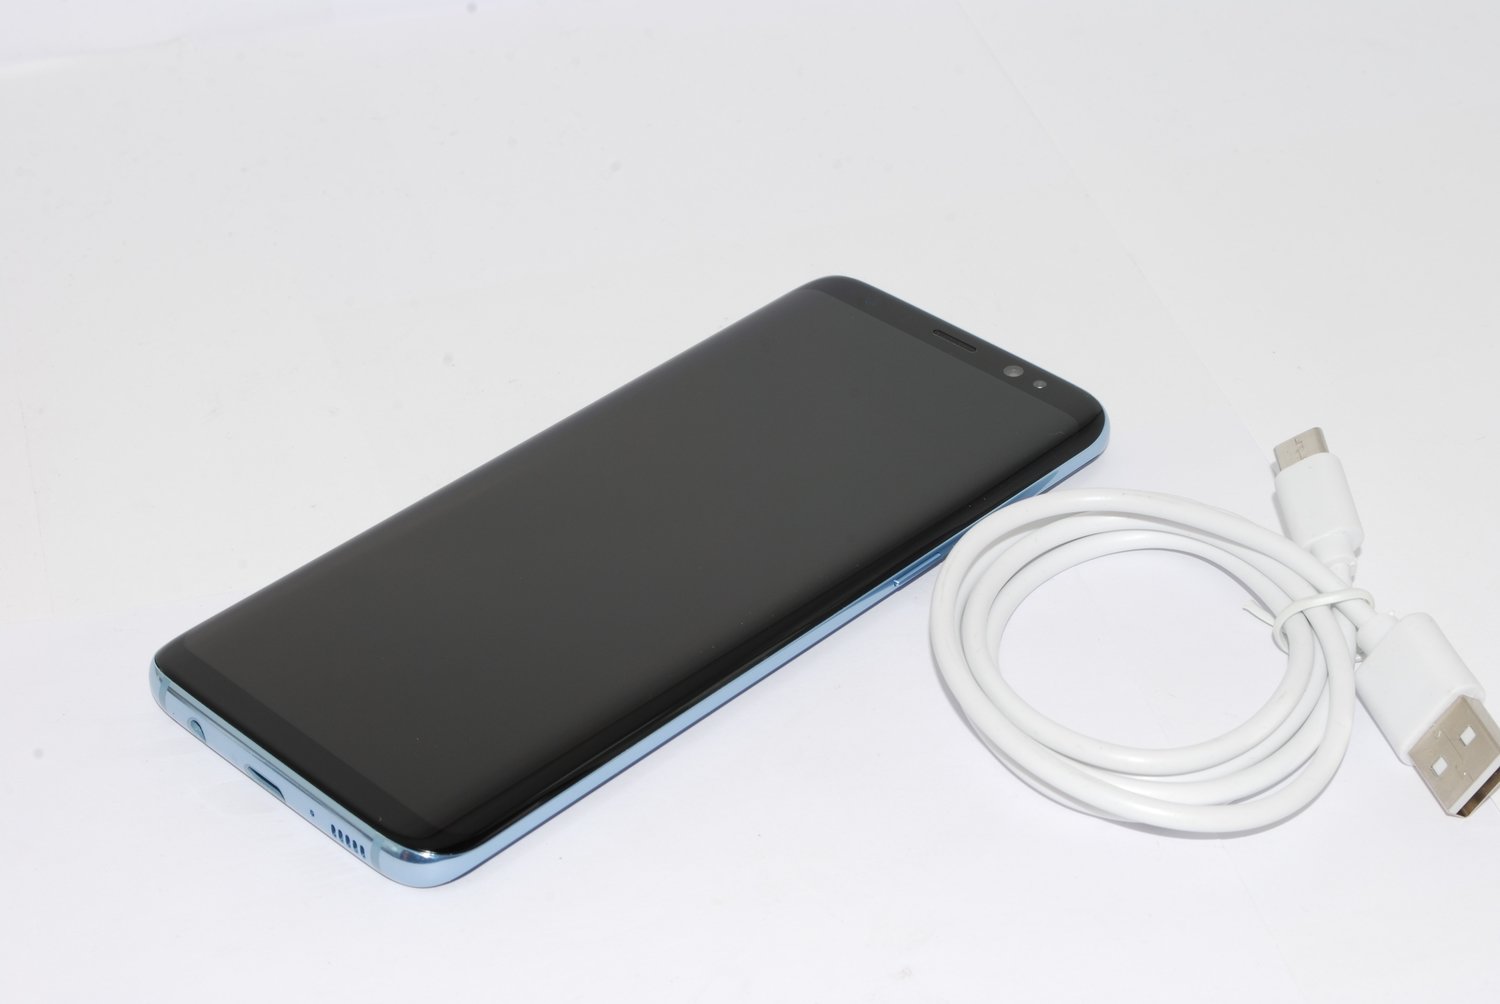 Samsung Galaxy S8 G950F BLUE  64GB UNLOCKED 4G LTE SIM FREE UK STOCK NO BOX #